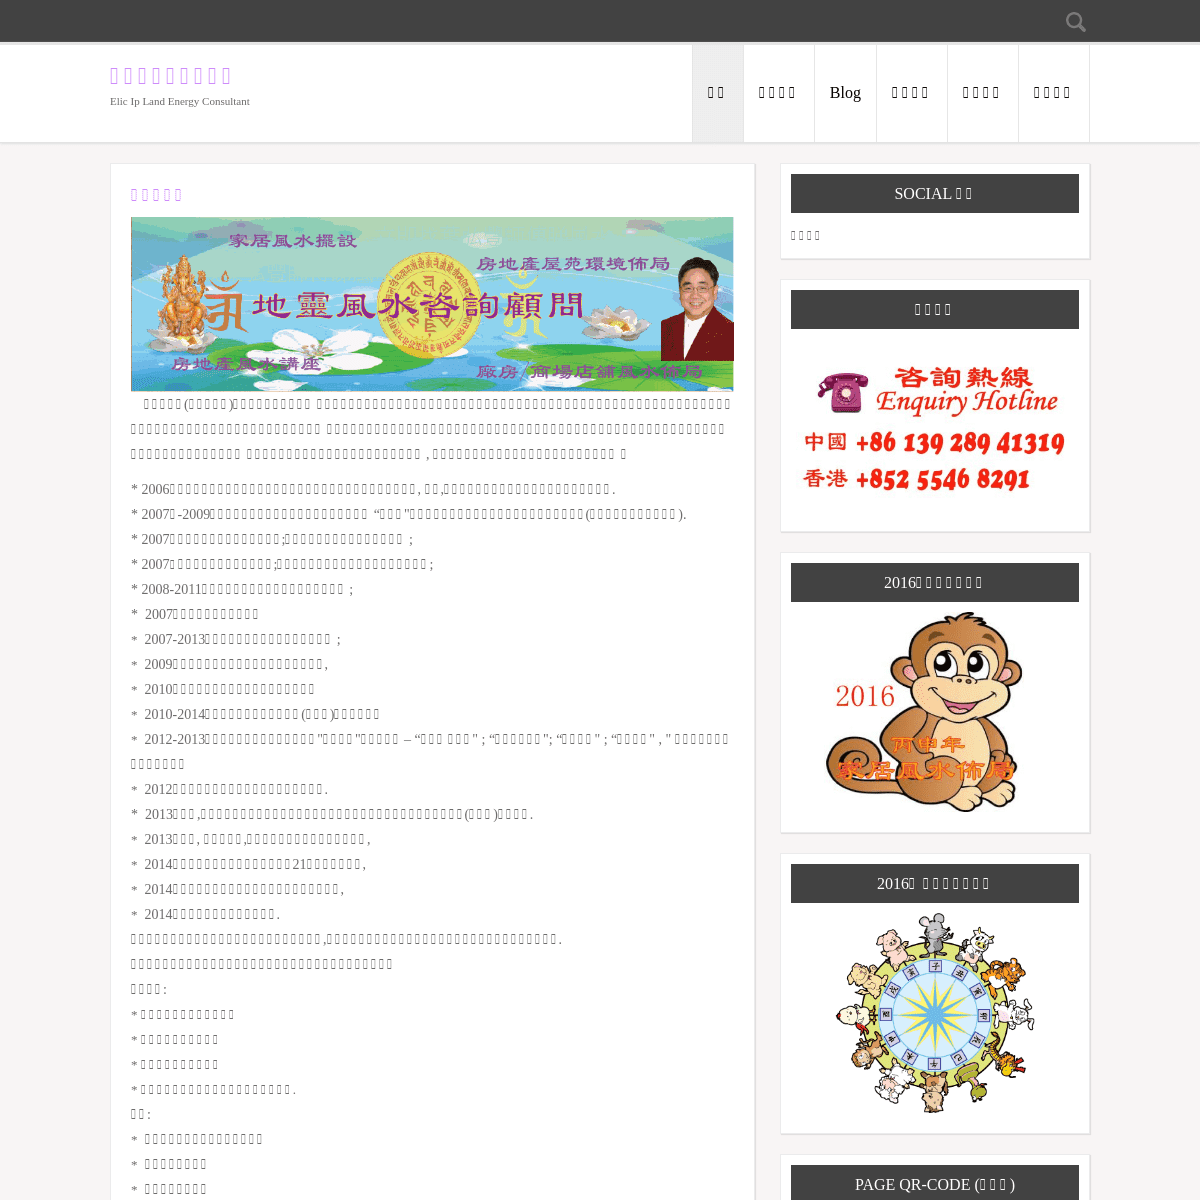 A complete backup of hkfeng-shui.com